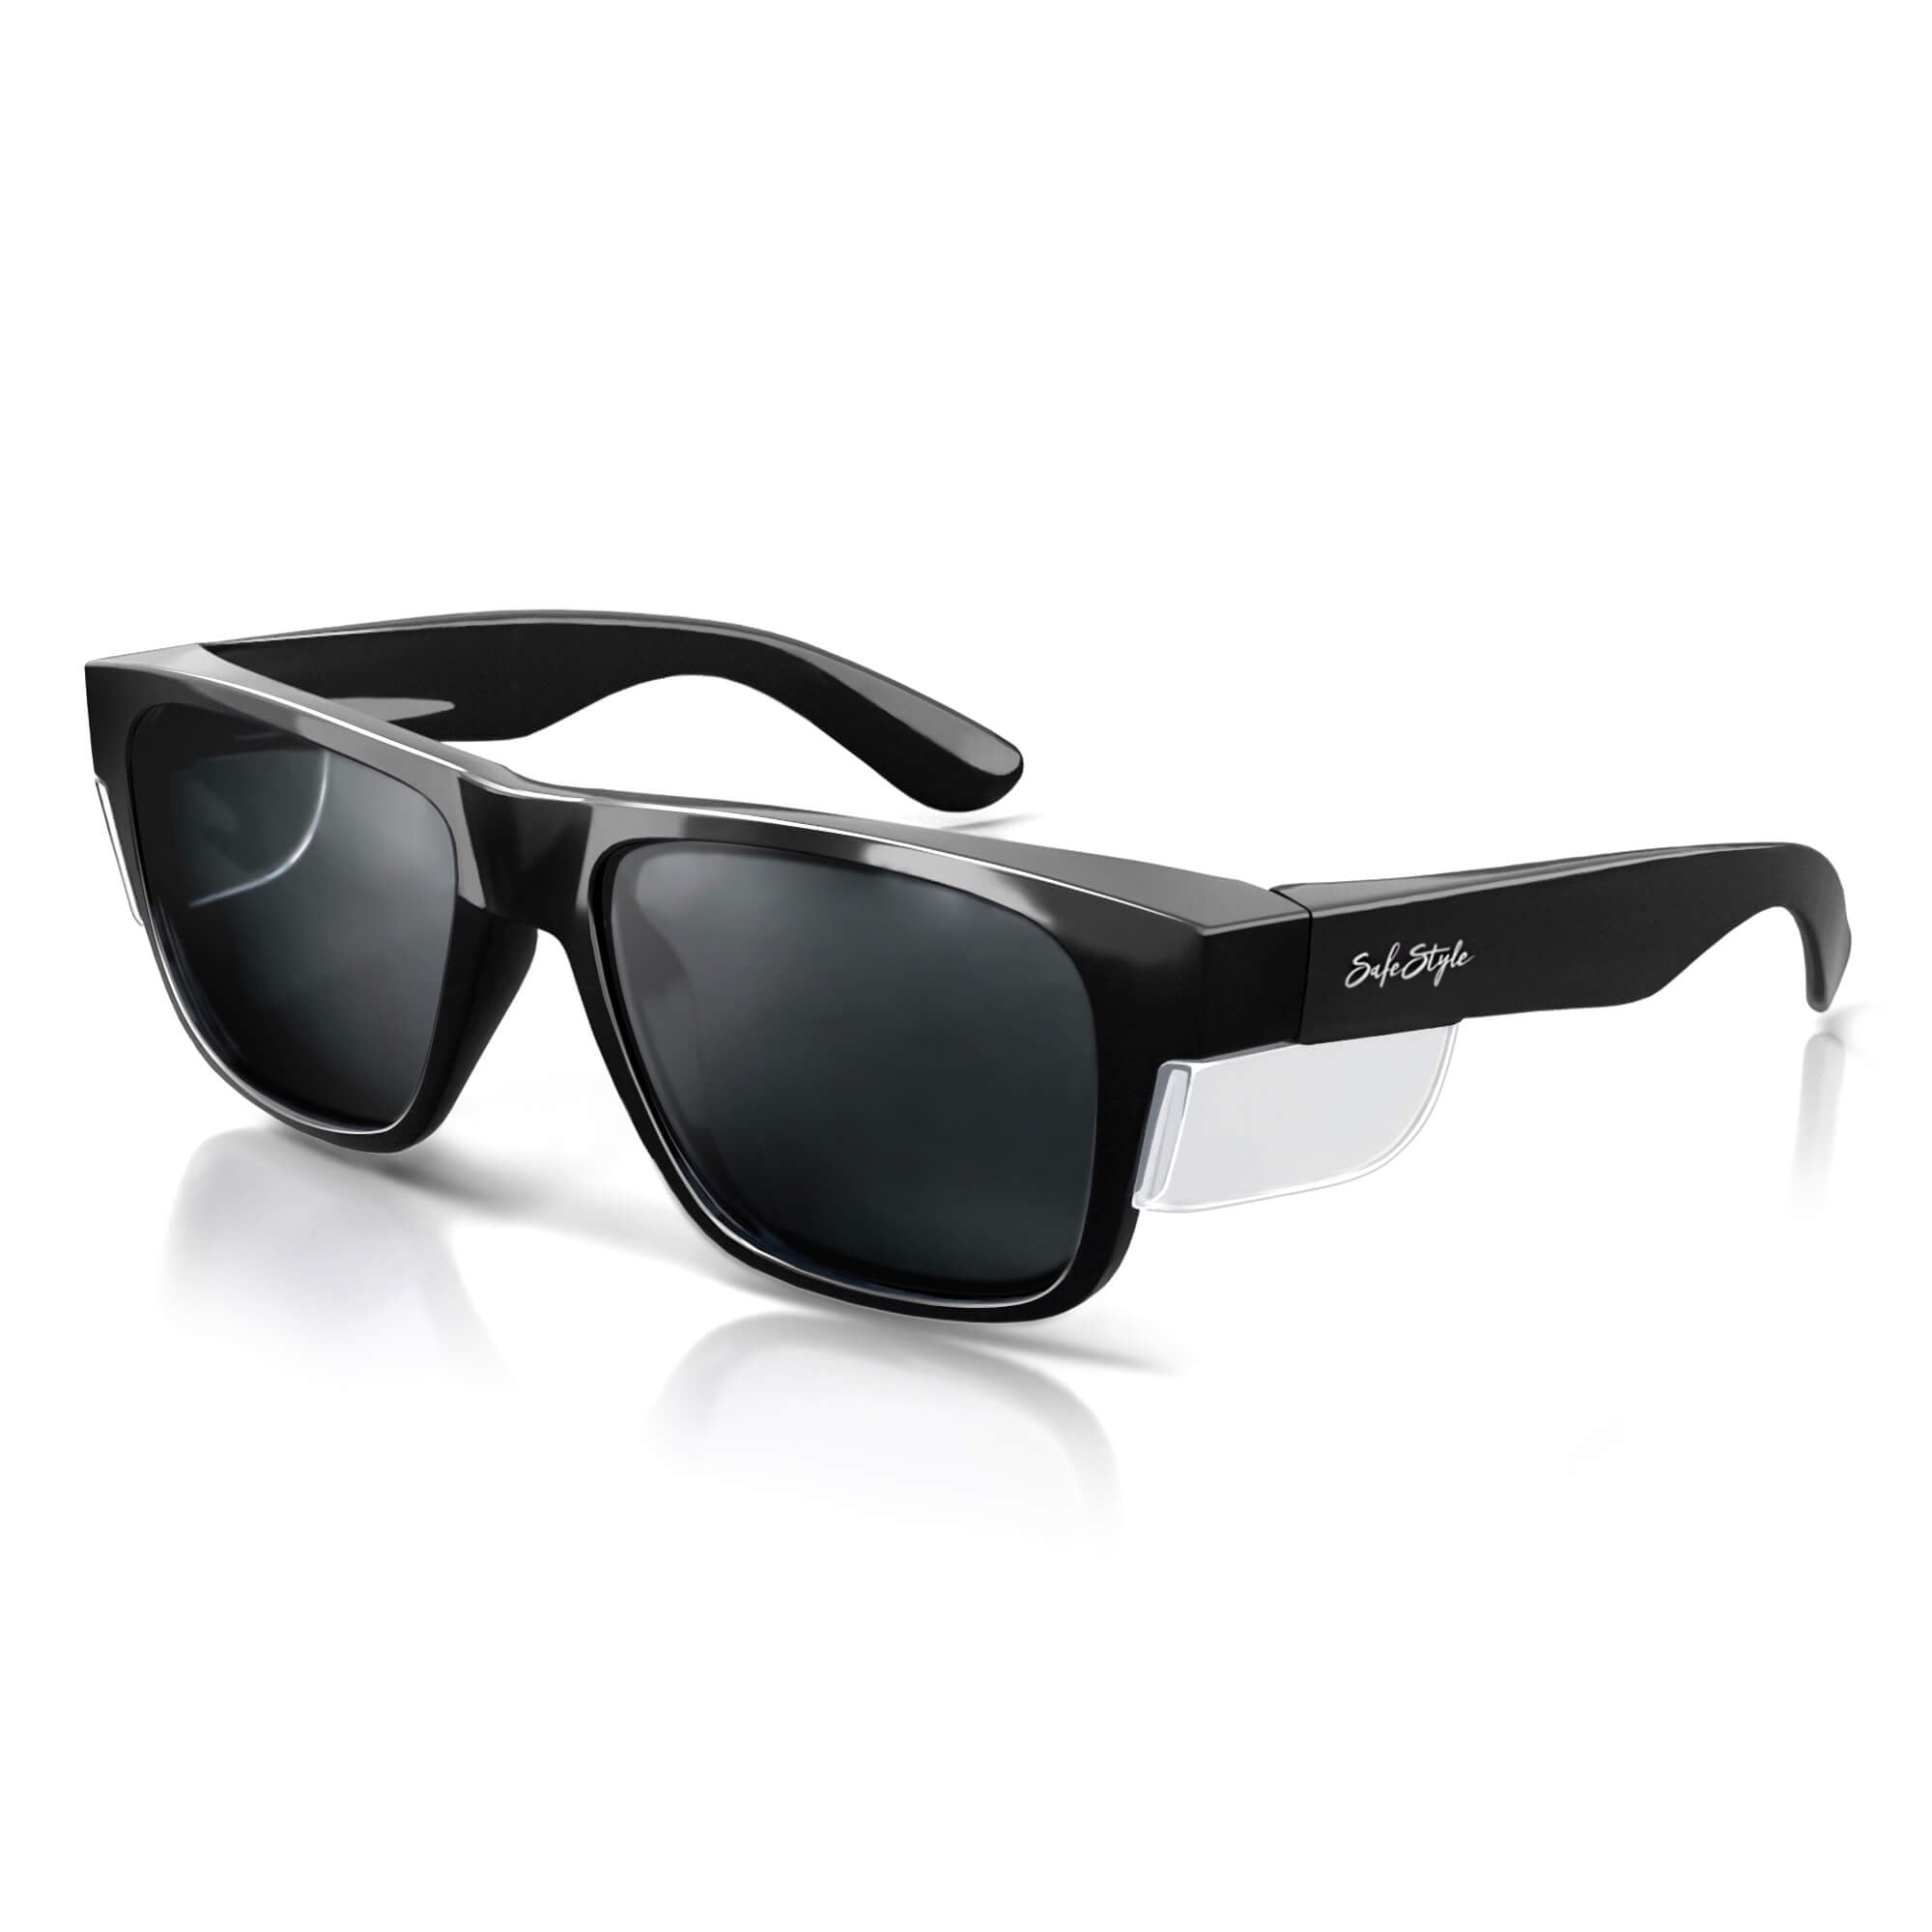 SafeStyle Fusions Black Frame/Polarised UV400 Lens glasses